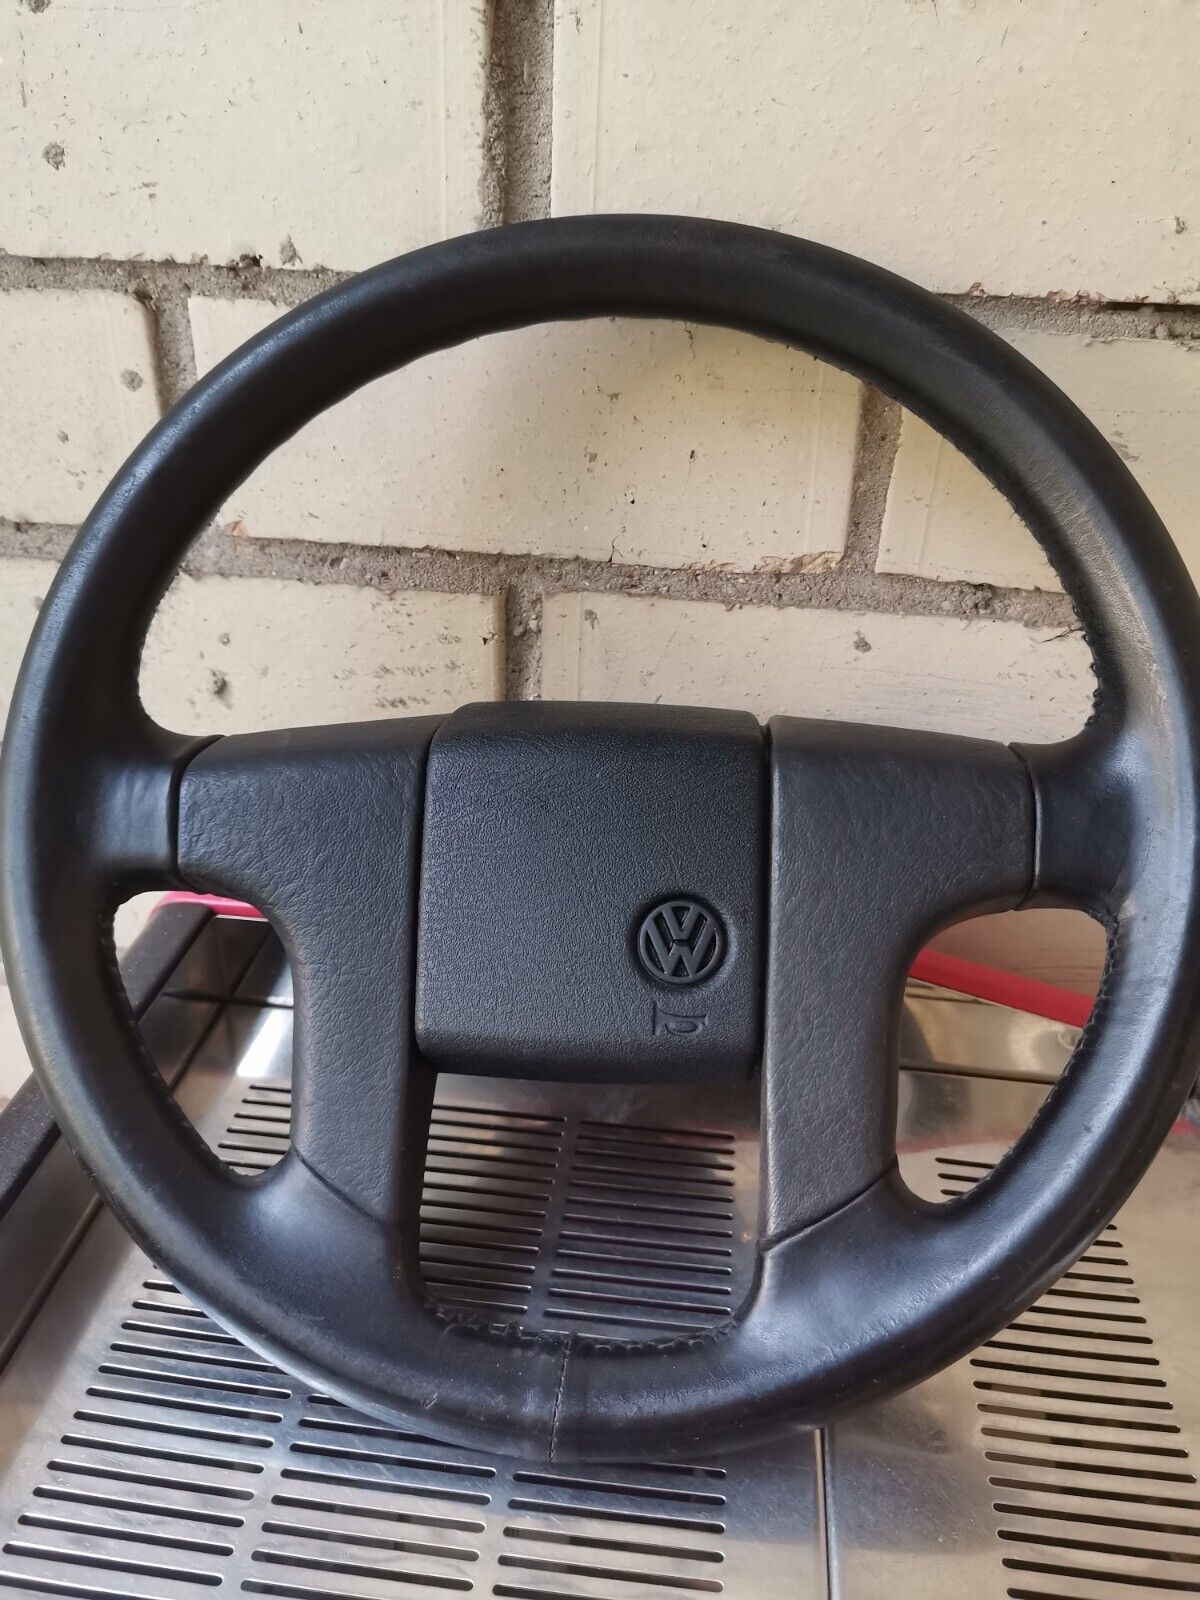 Volkswagen Golf/Jetta MK2 GTI G60 Corrado leather steering wheel 191 419 091 AJ